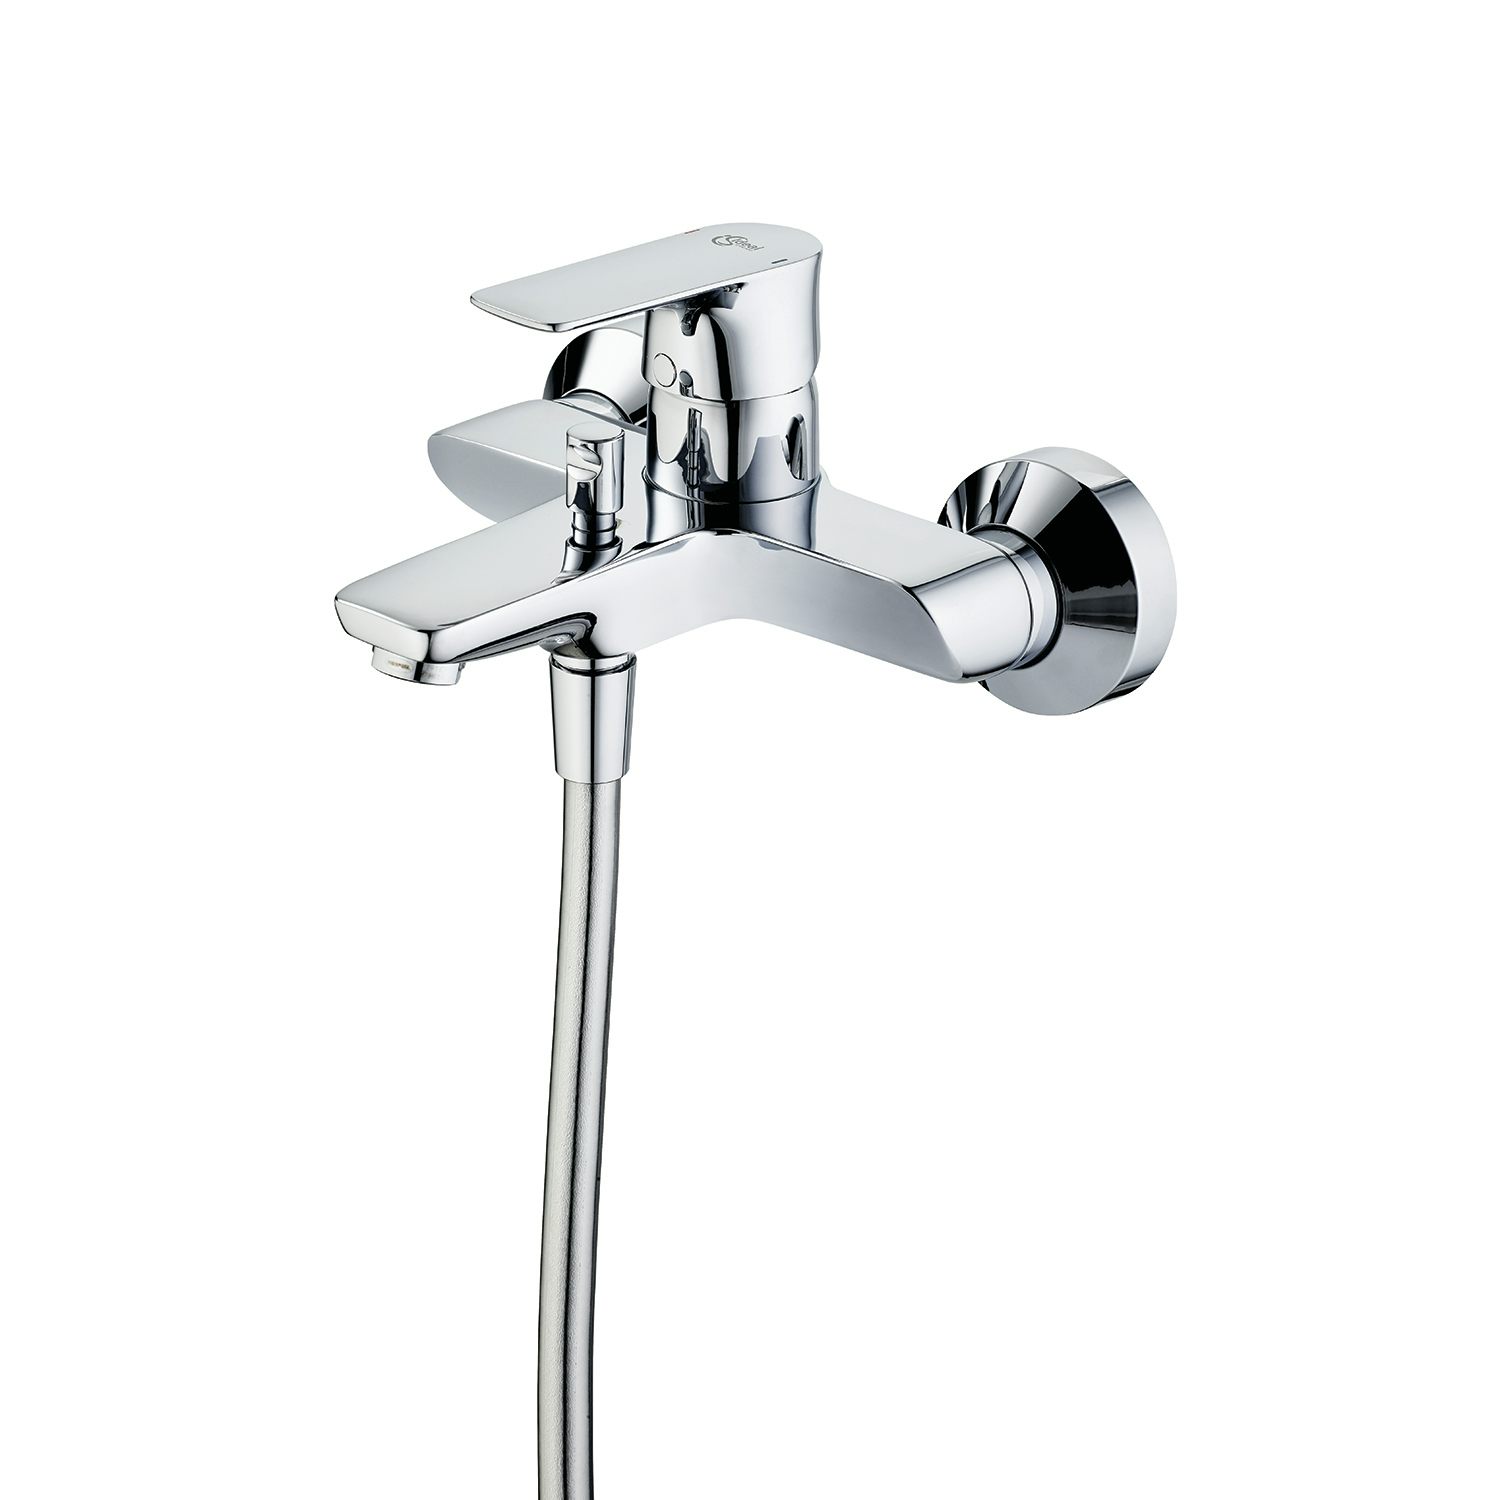 Ideal Standard Concept Air wall mounted bath shower mixer tap